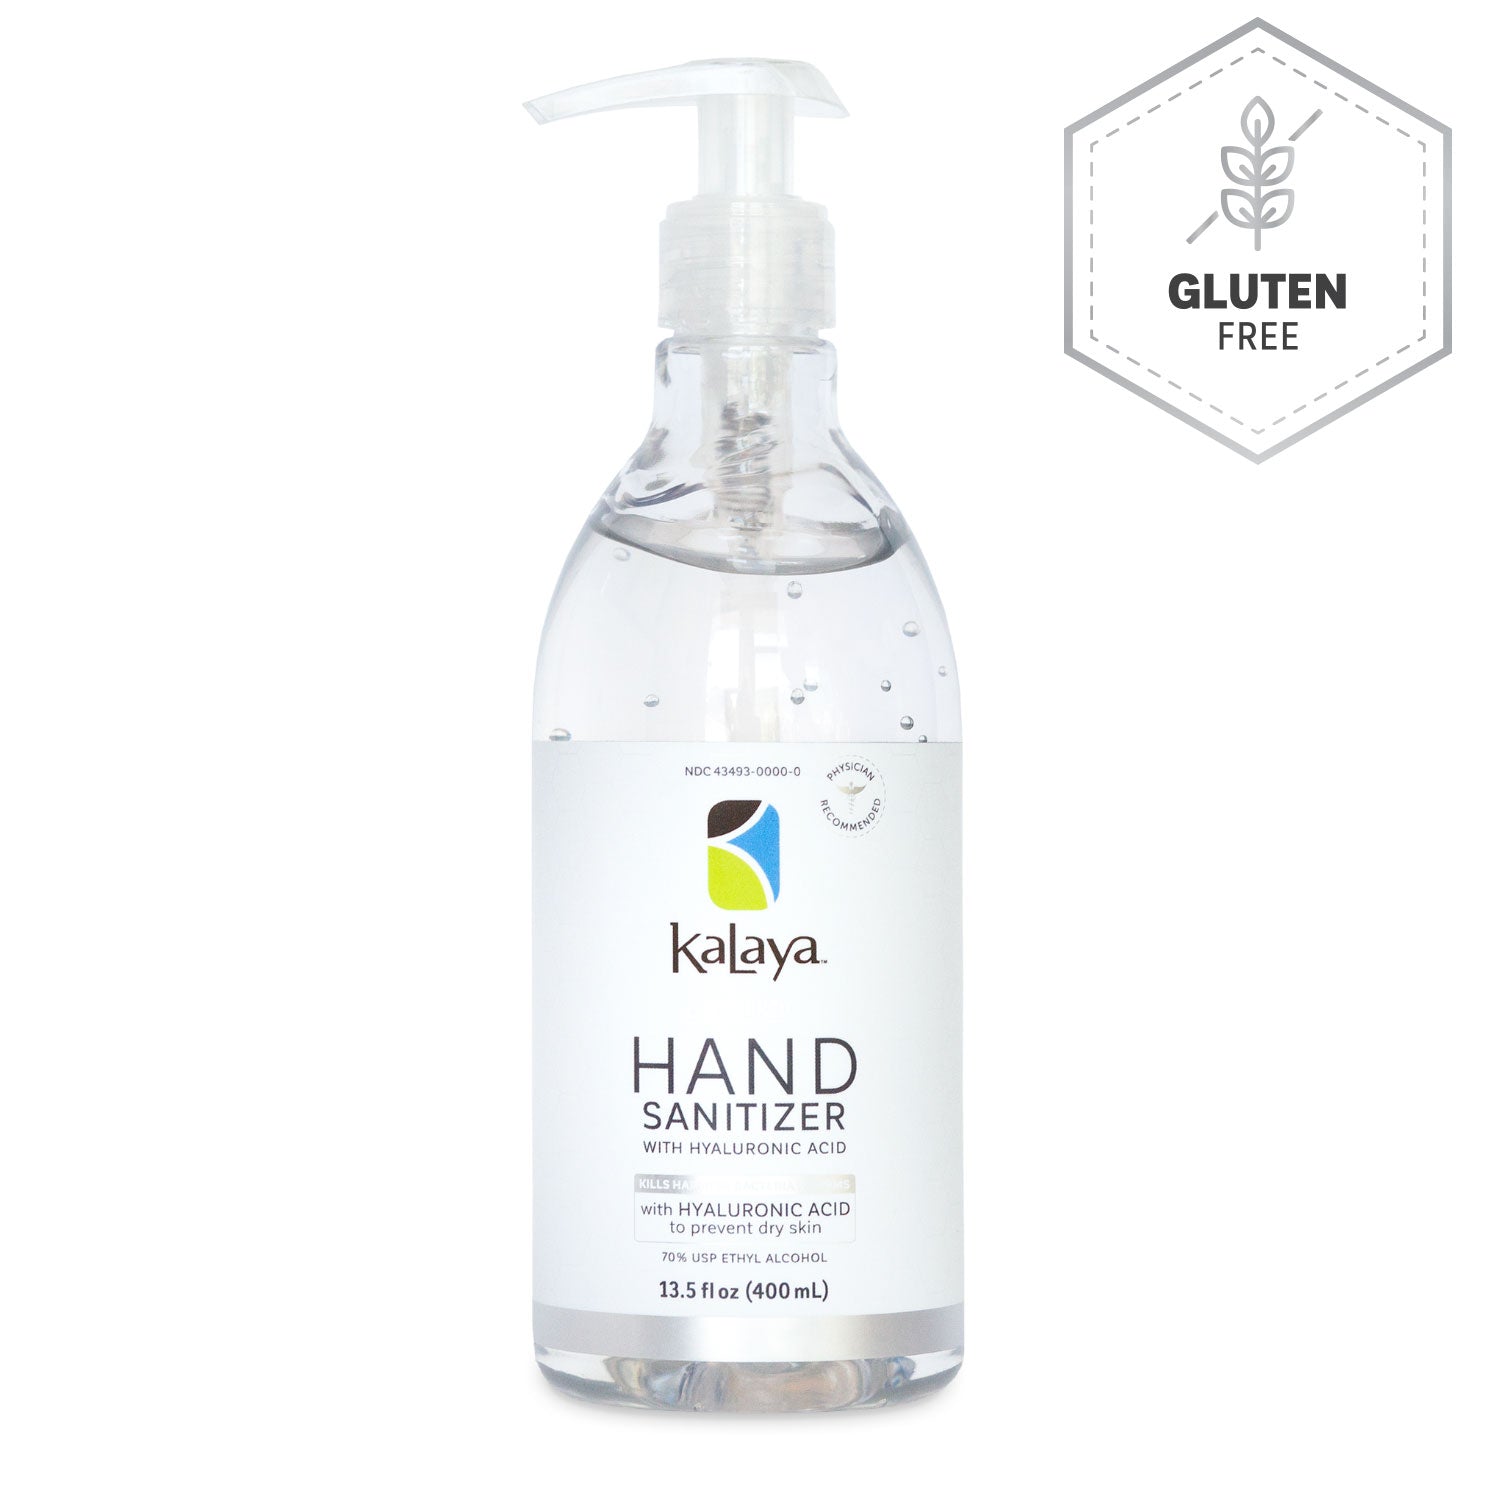 Clear bottle of Kalaya Antiseptic Hand Sanitizer with Hyaluronic Acid 13.5 fl oz, front - Gluten Free